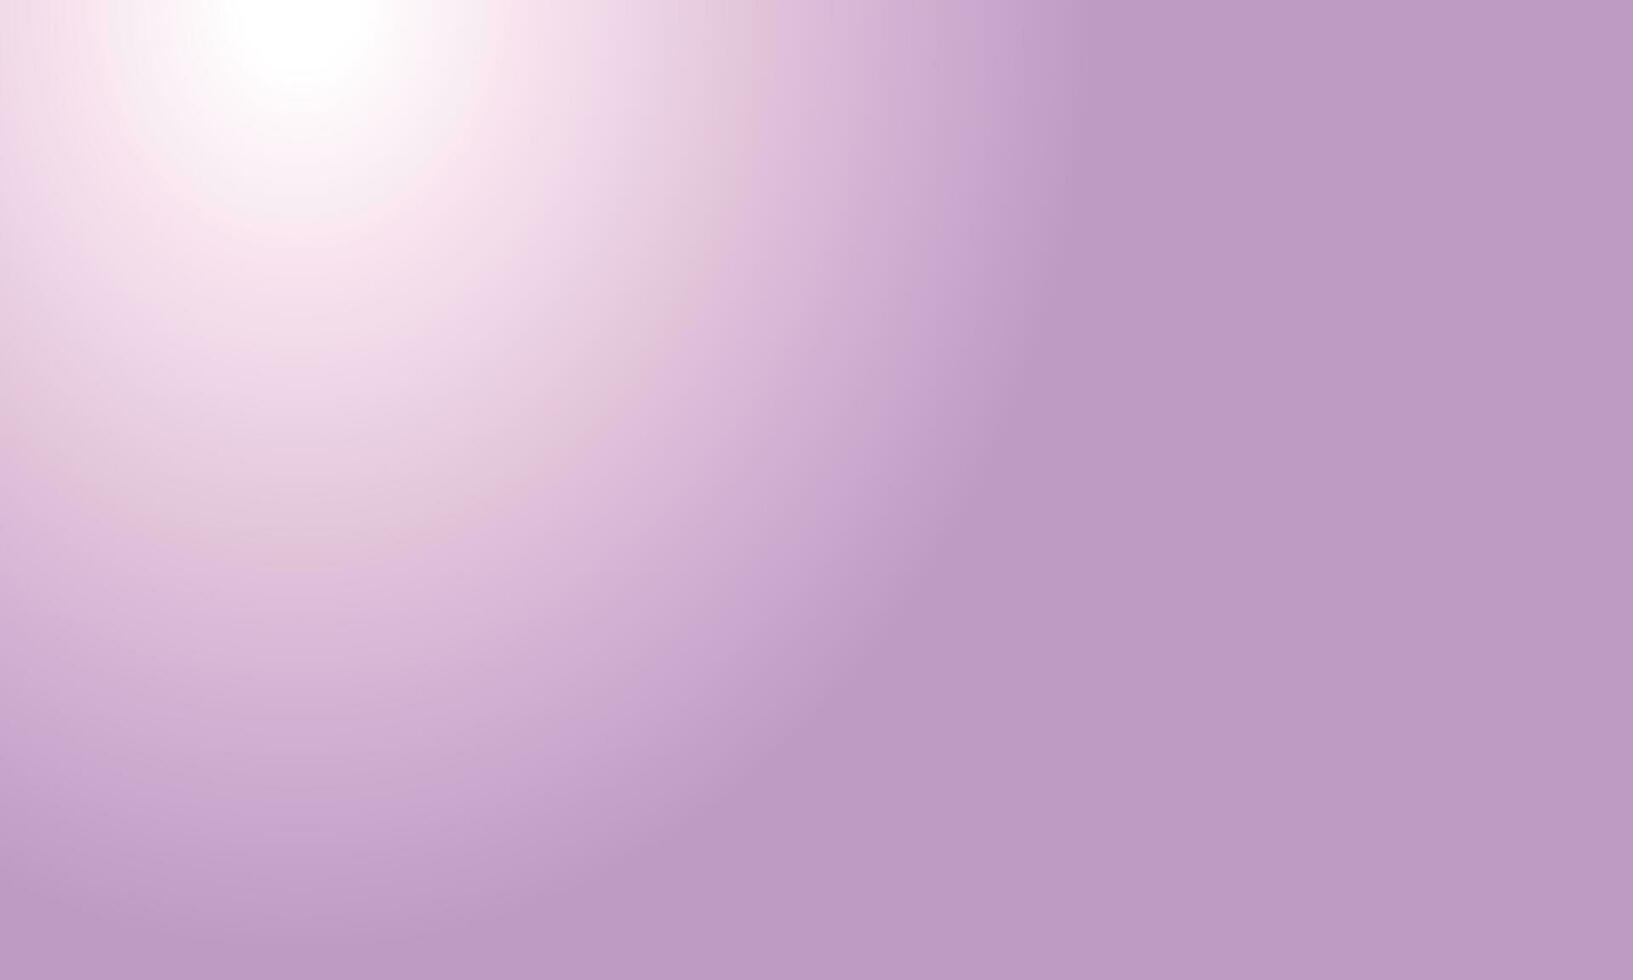 Vector abstract light gradient purple background